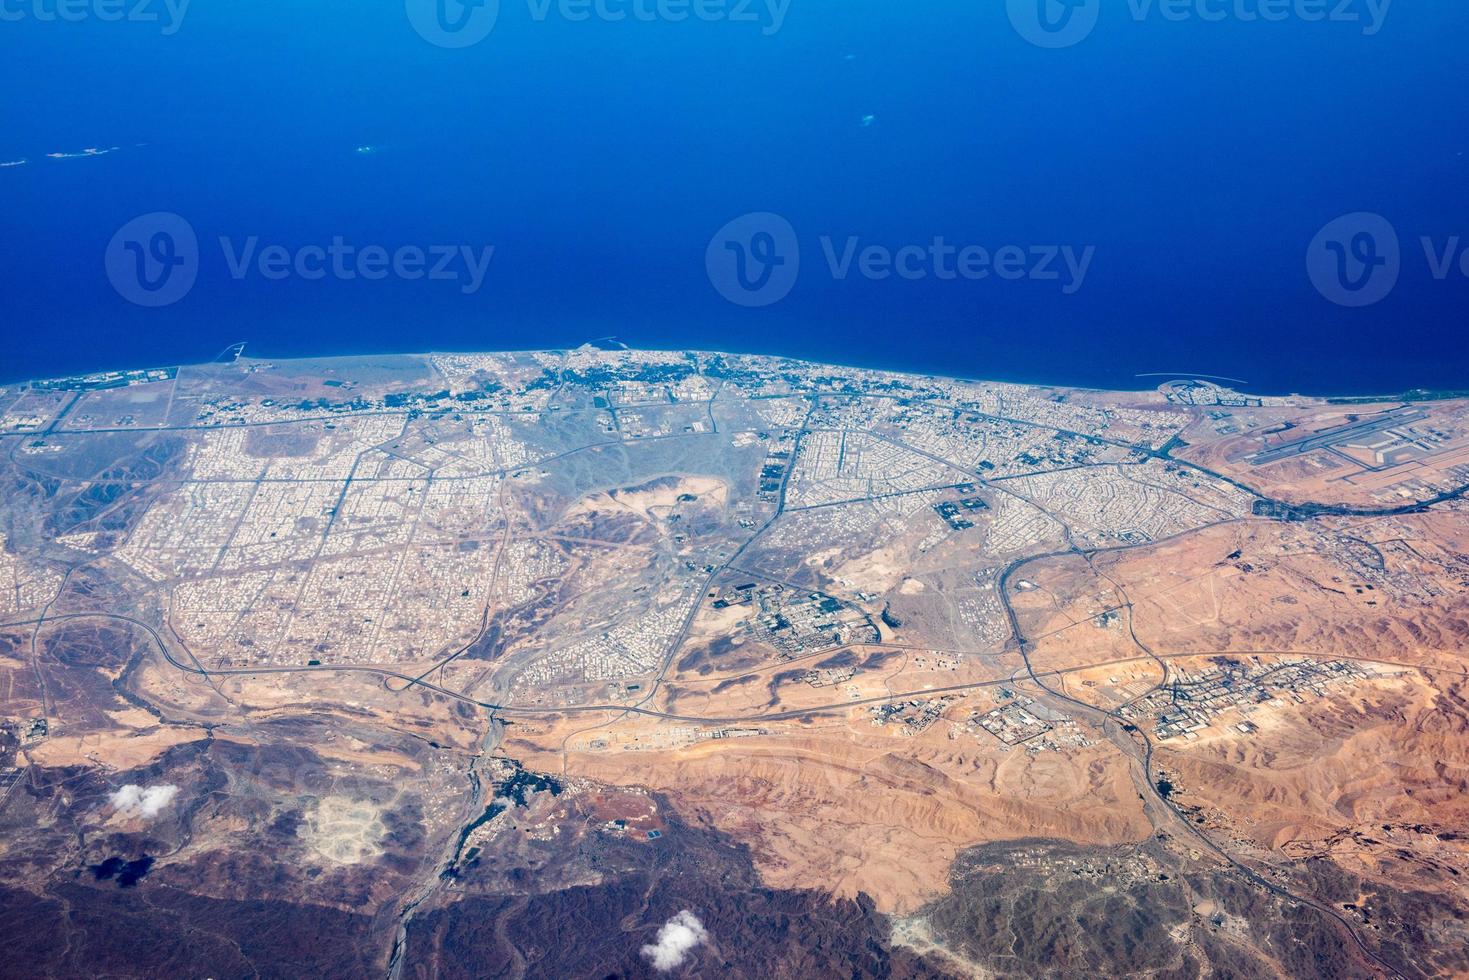 muscat Arabisch stad- antenne visie landschap foto